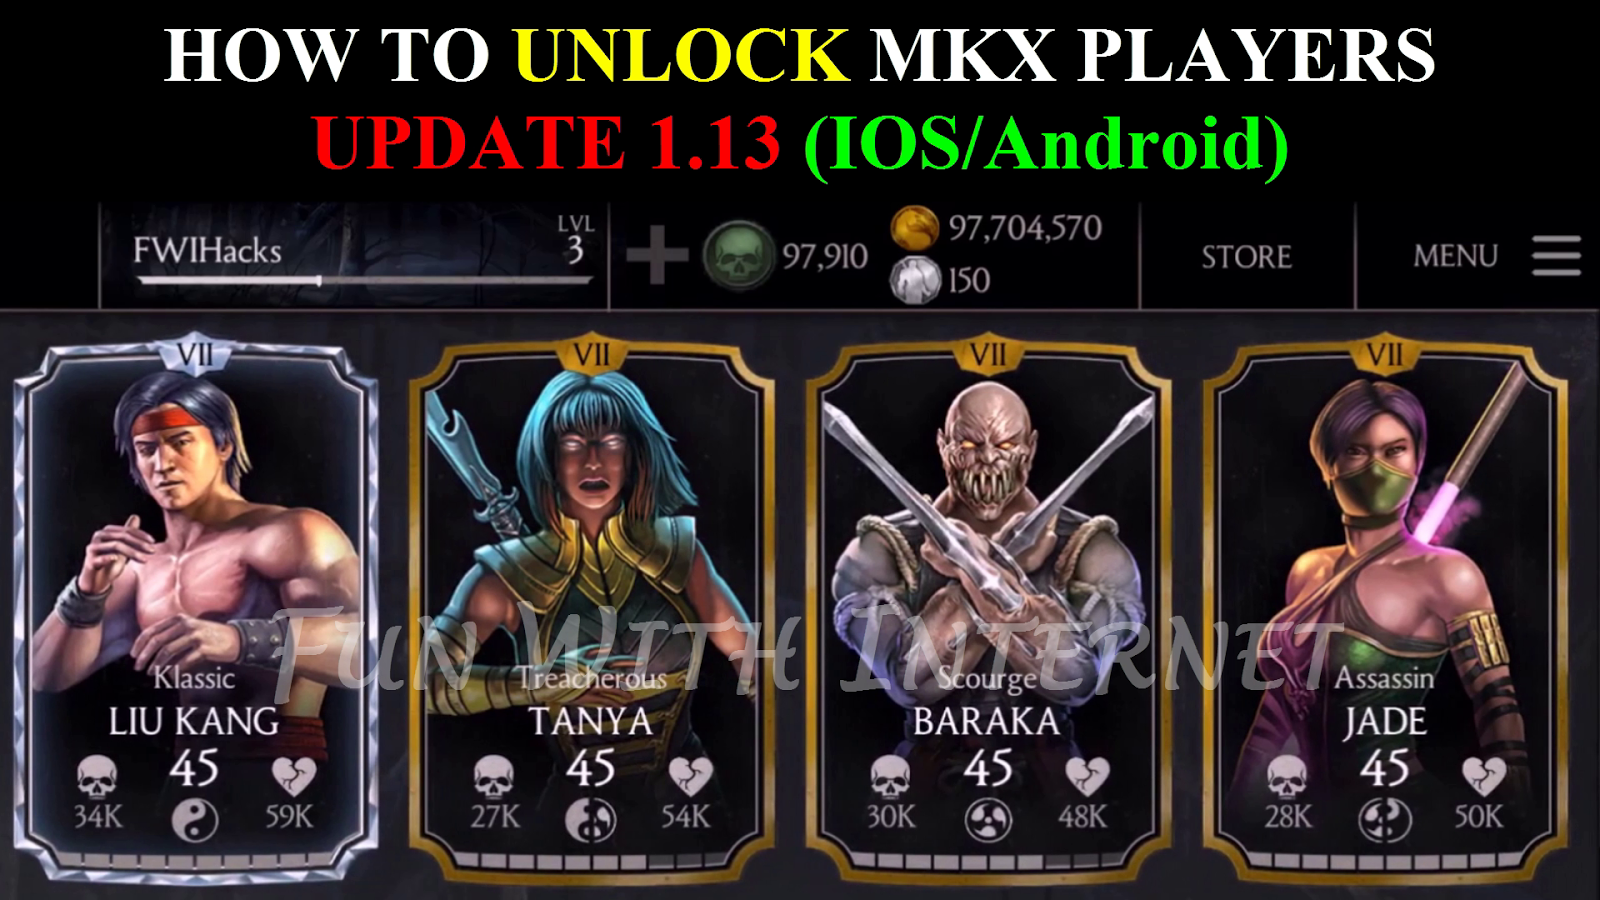 MKX Mobile Update 1.13 New Players (BARAKA, ASSASSIN JADE ...